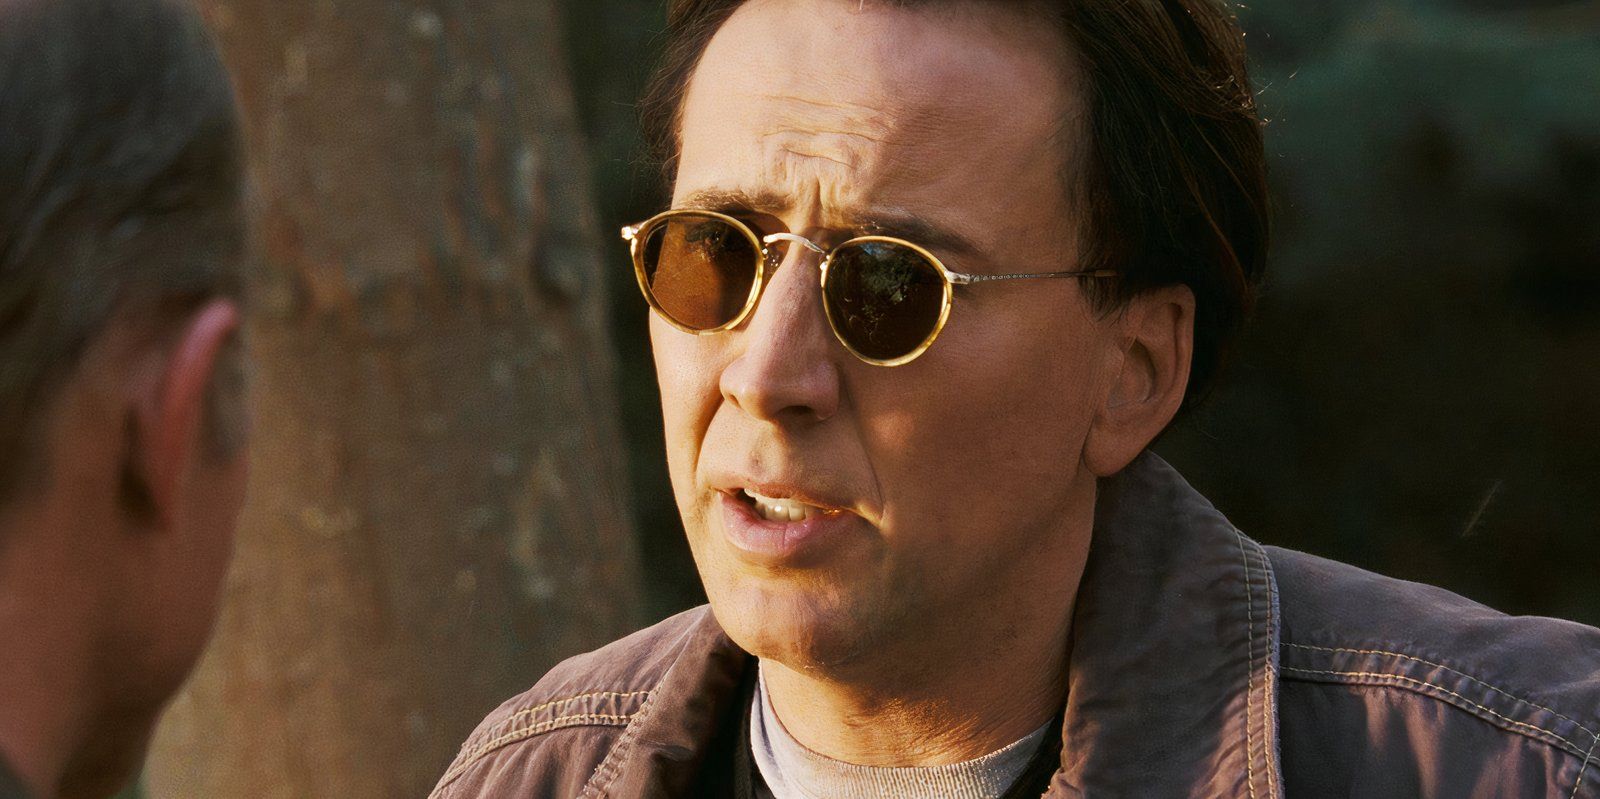 Nicolas Cage wearing sunglasses as Ben Gates in National Treasure 2